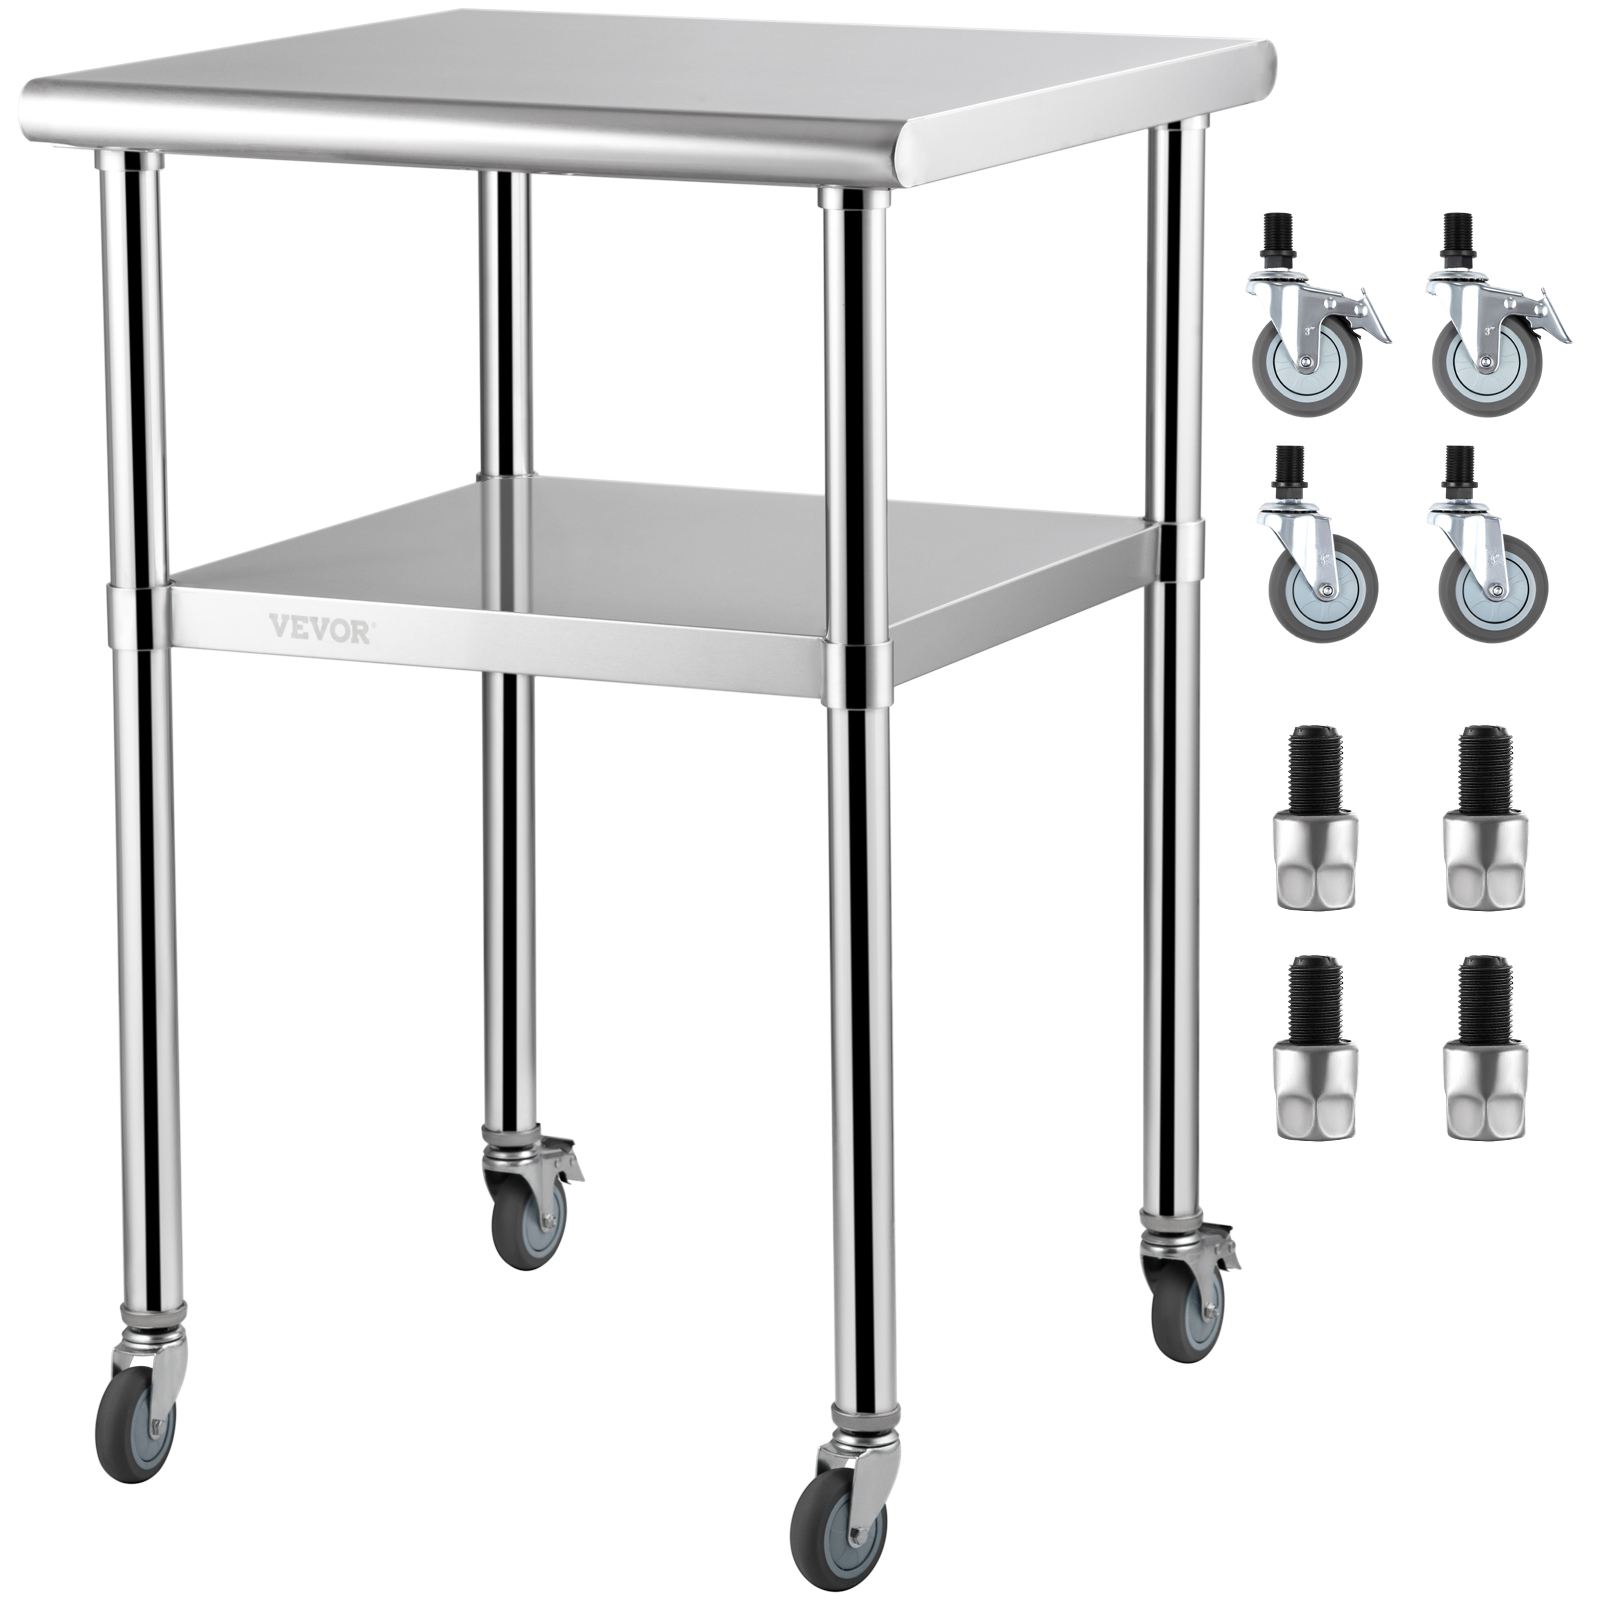 VEVOR Stainless Steel Prep Table, 24 x 24 x 36 inch, 600lbs Load Capacity Heavy Duty Metal Worktable with Adjustable Undershelf